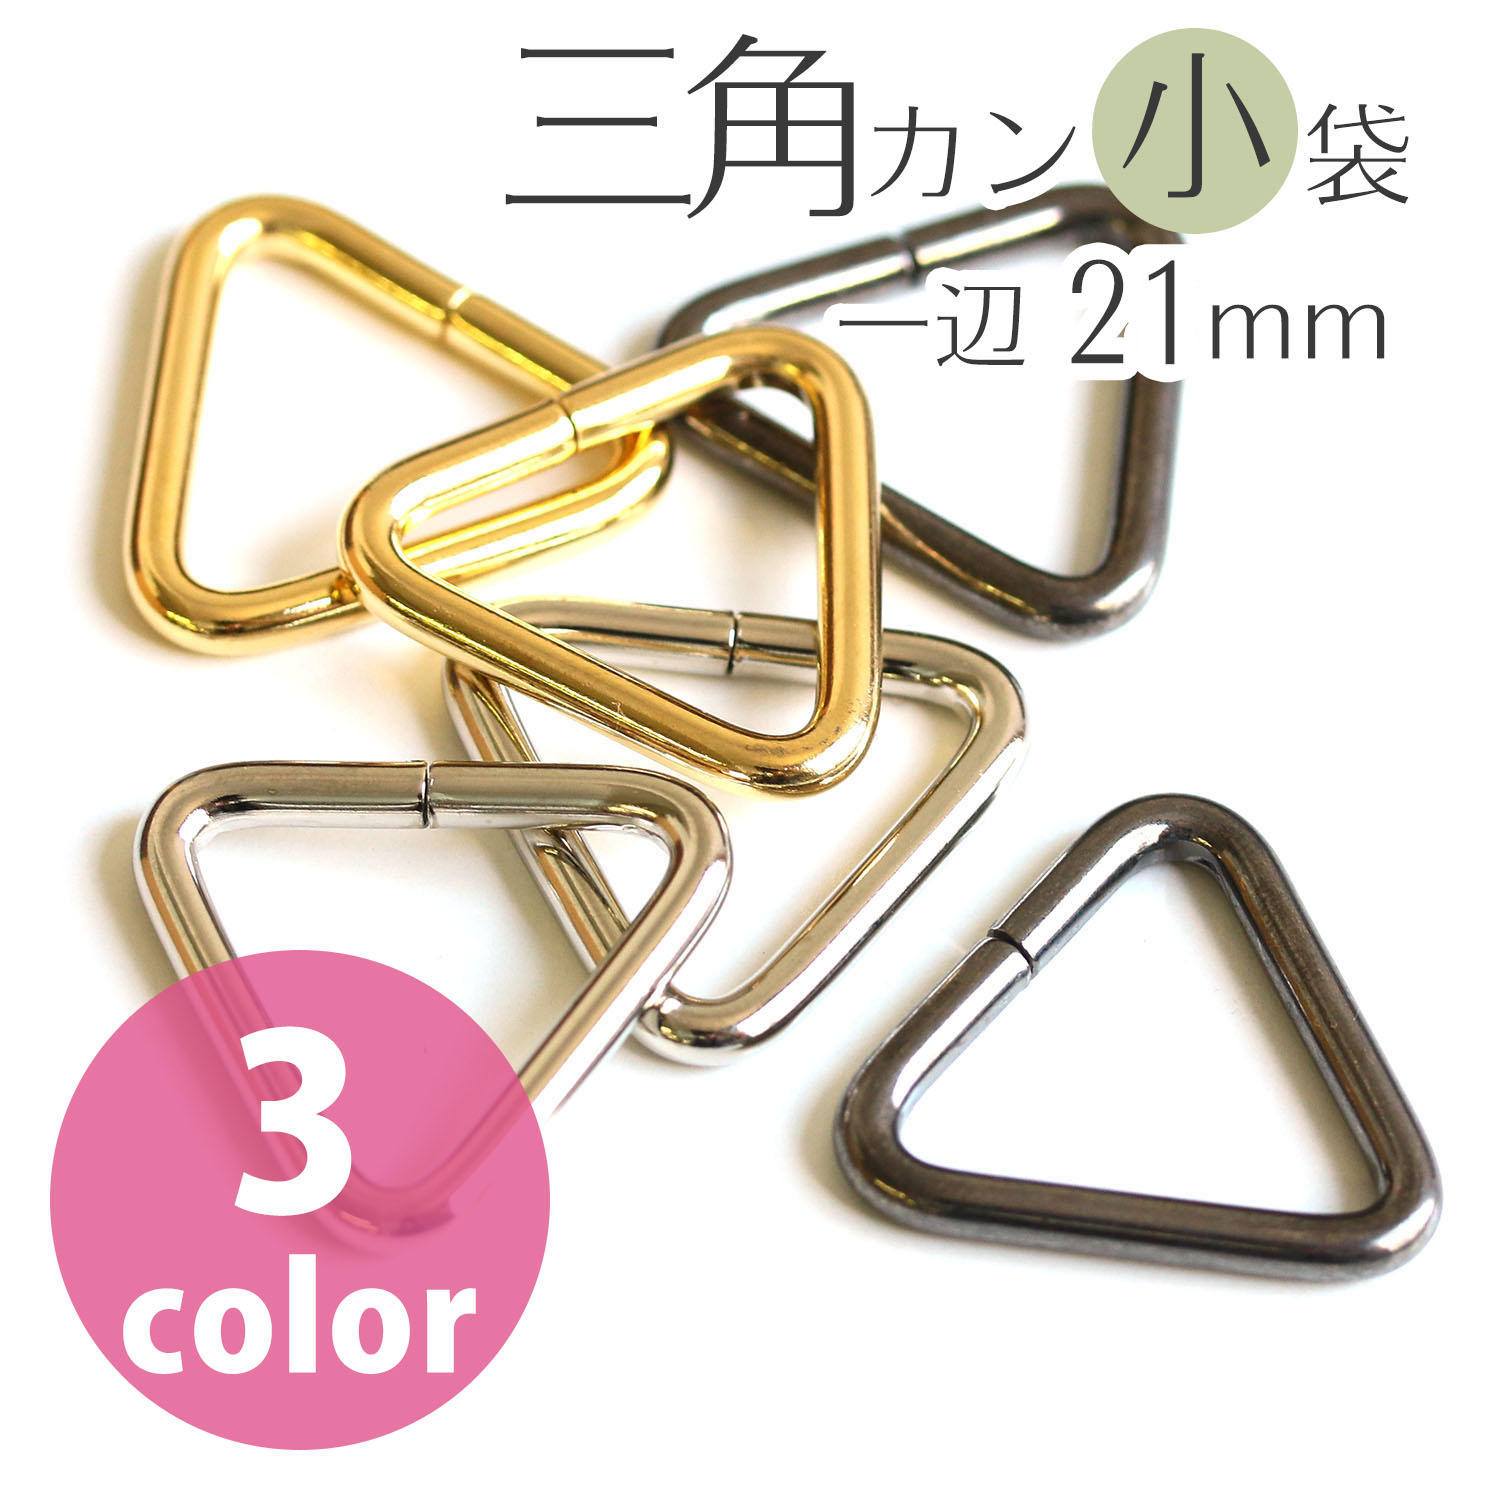 S25 Triangular Ring 21mm (bag)